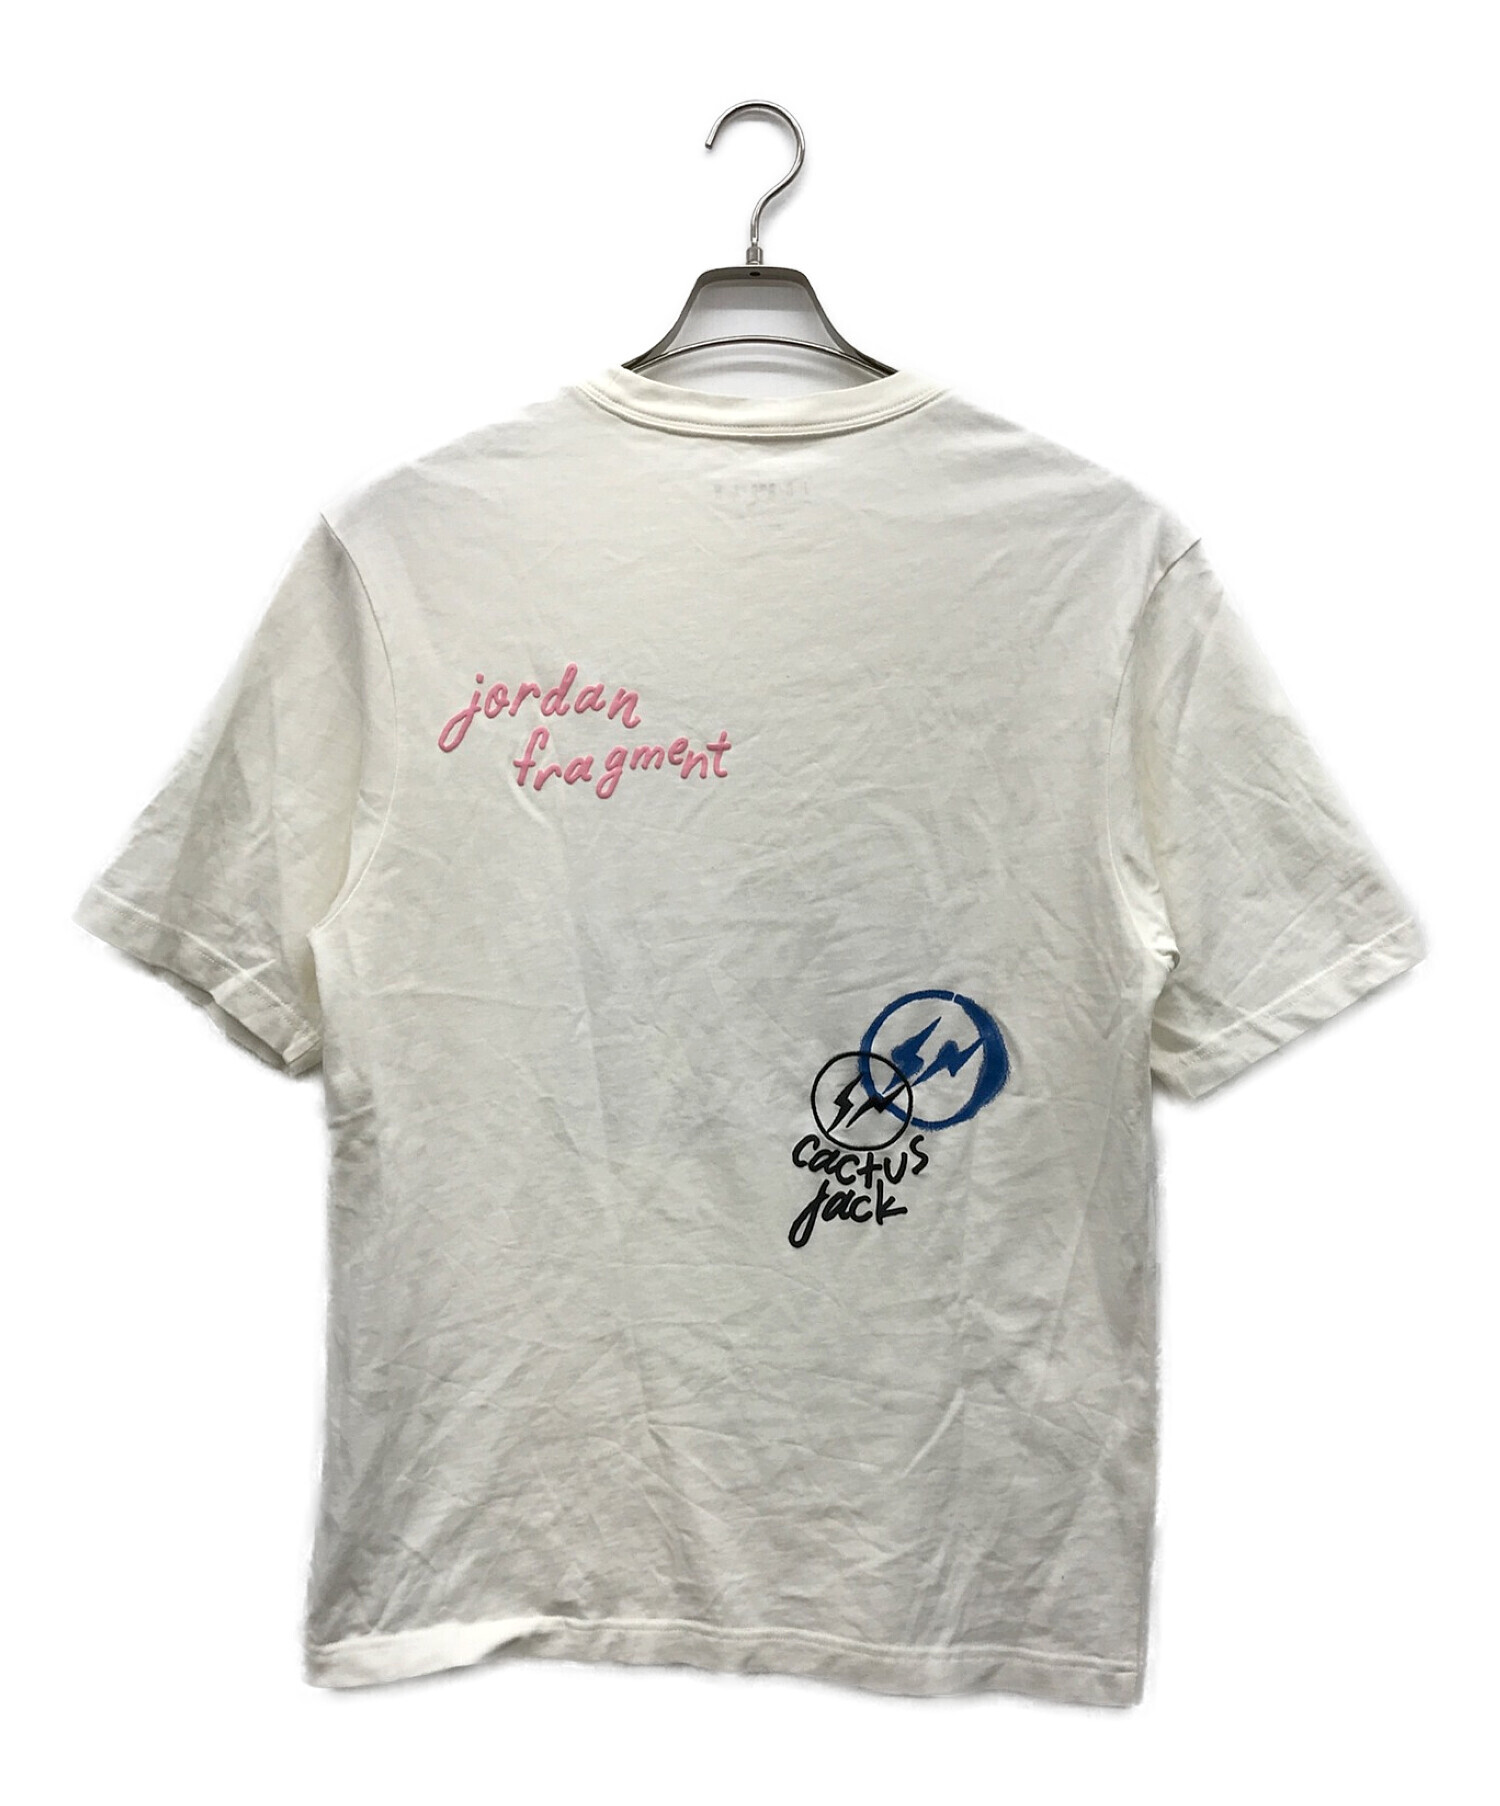 NIKE (ナイキ) FRAGMENT DESIGN (フラグメント デザイン) プリントTシャツ ホワイト サイズ:S